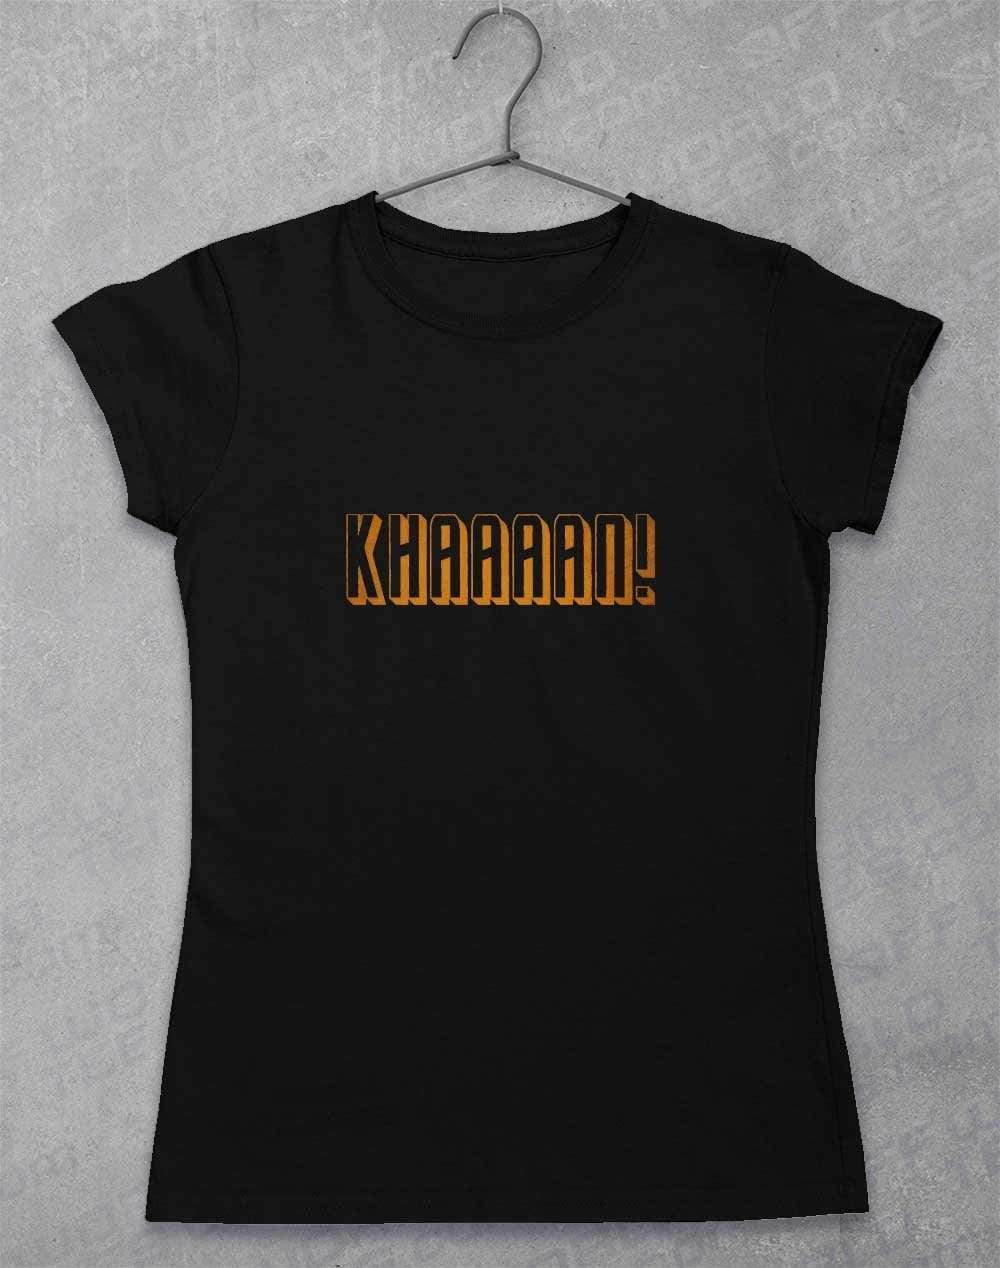 KHAAAAAN Womens T-Shirt 8-10 / Black  - Off World Tees